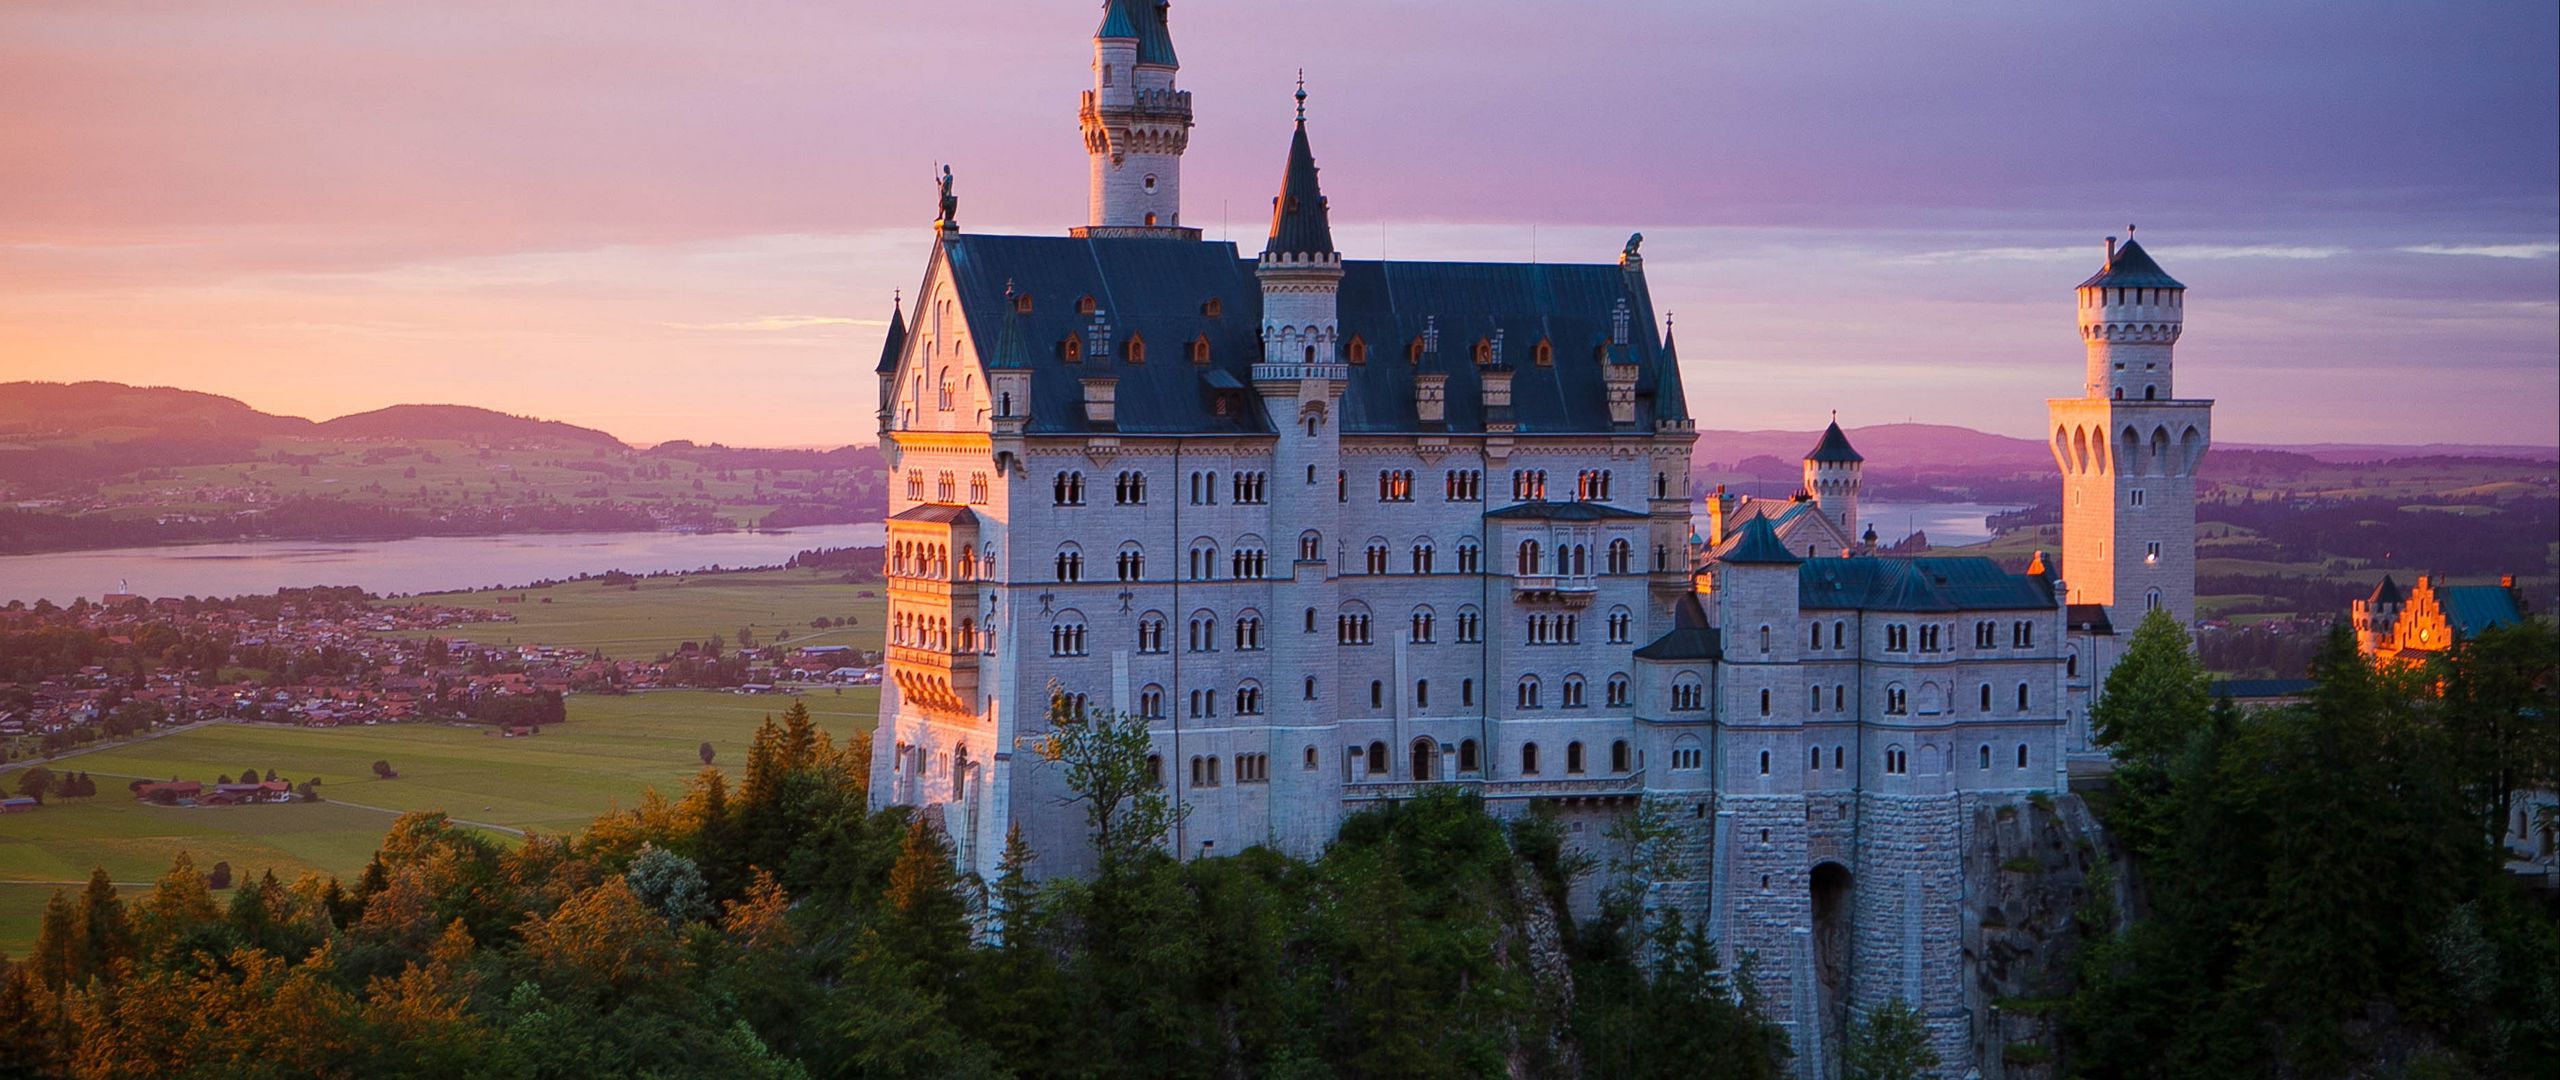 Download wallpaper 2560x1080 castle, neuschwanstein castle